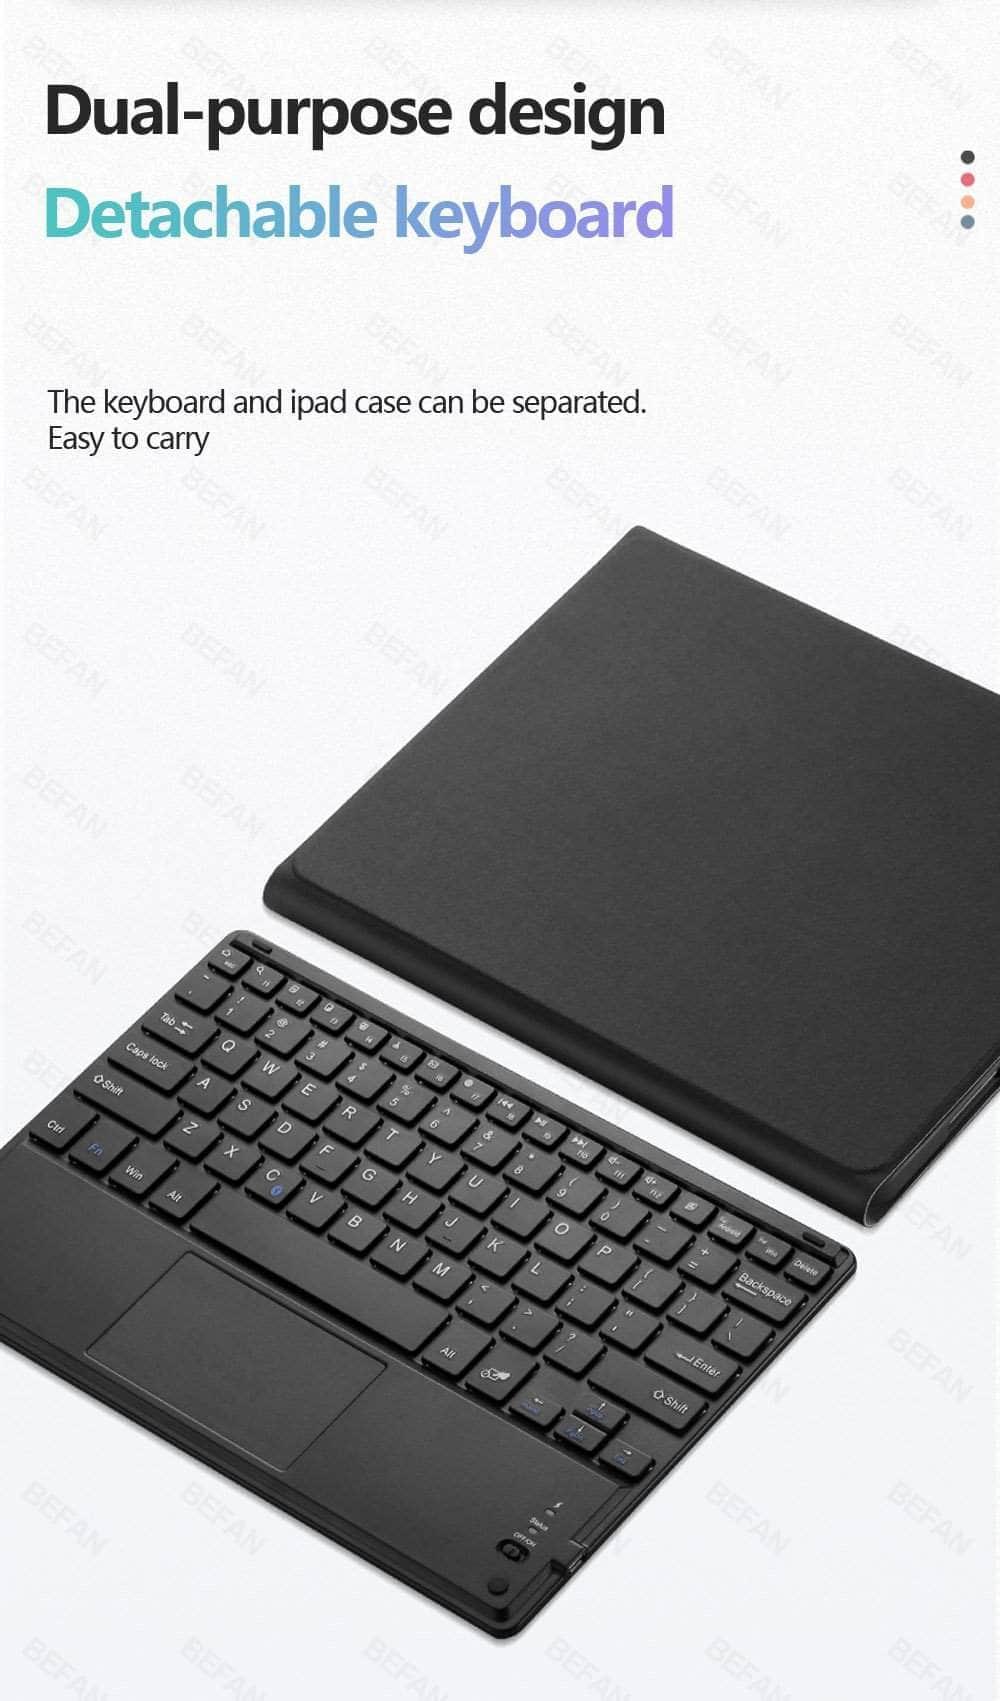 CaseBuddy Australia Casebuddy TouchPad Keyboard iPad Air 4 10.9 Keyboard Case